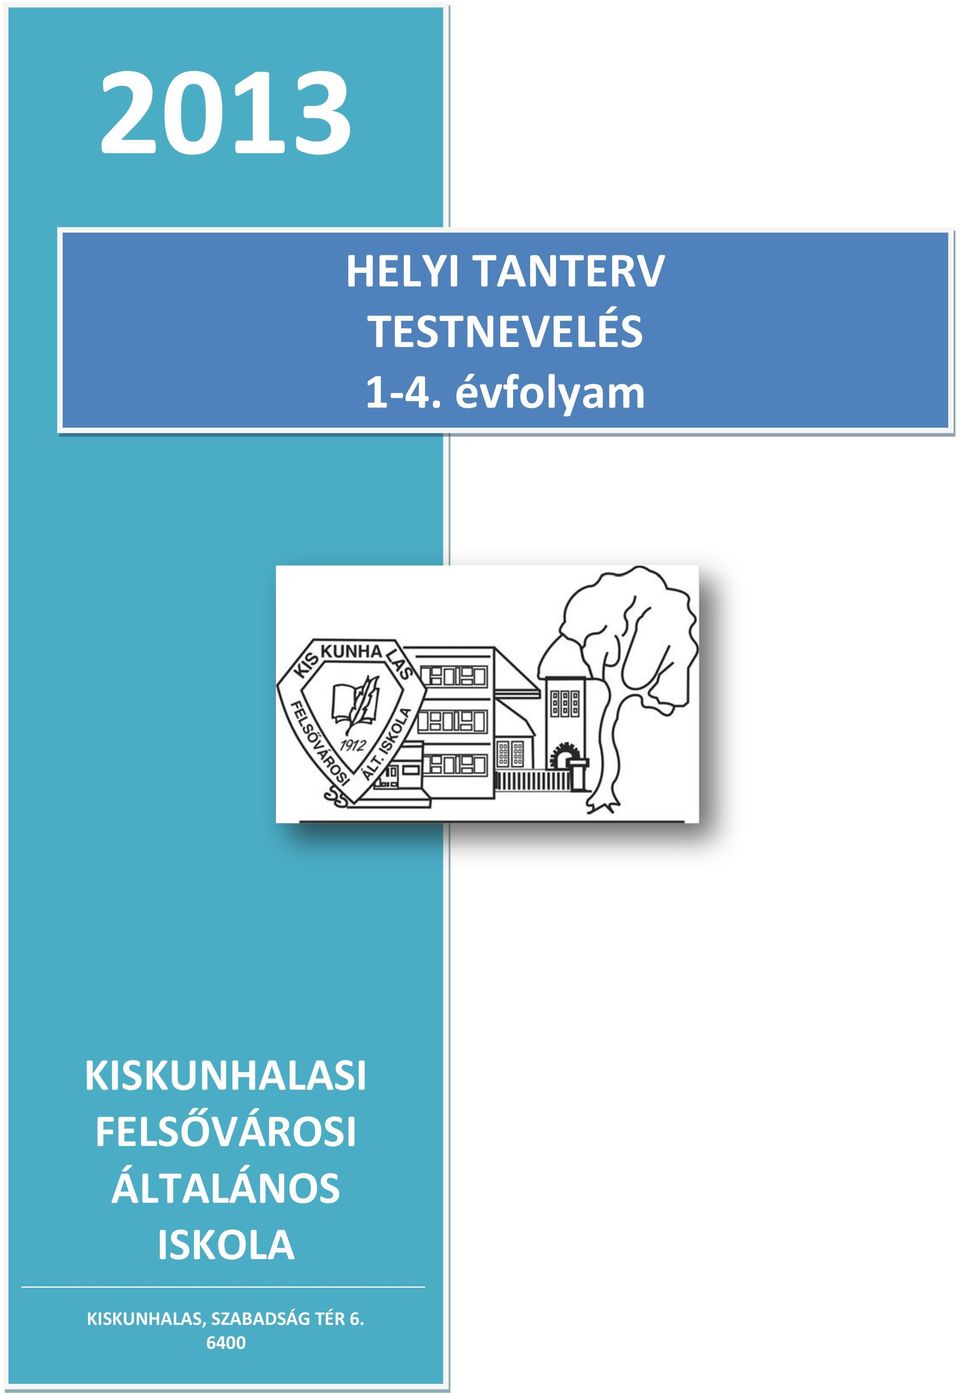 HELYI TANTERV TESTNEVELÉS 1-4. évfolyam - PDF Free Download